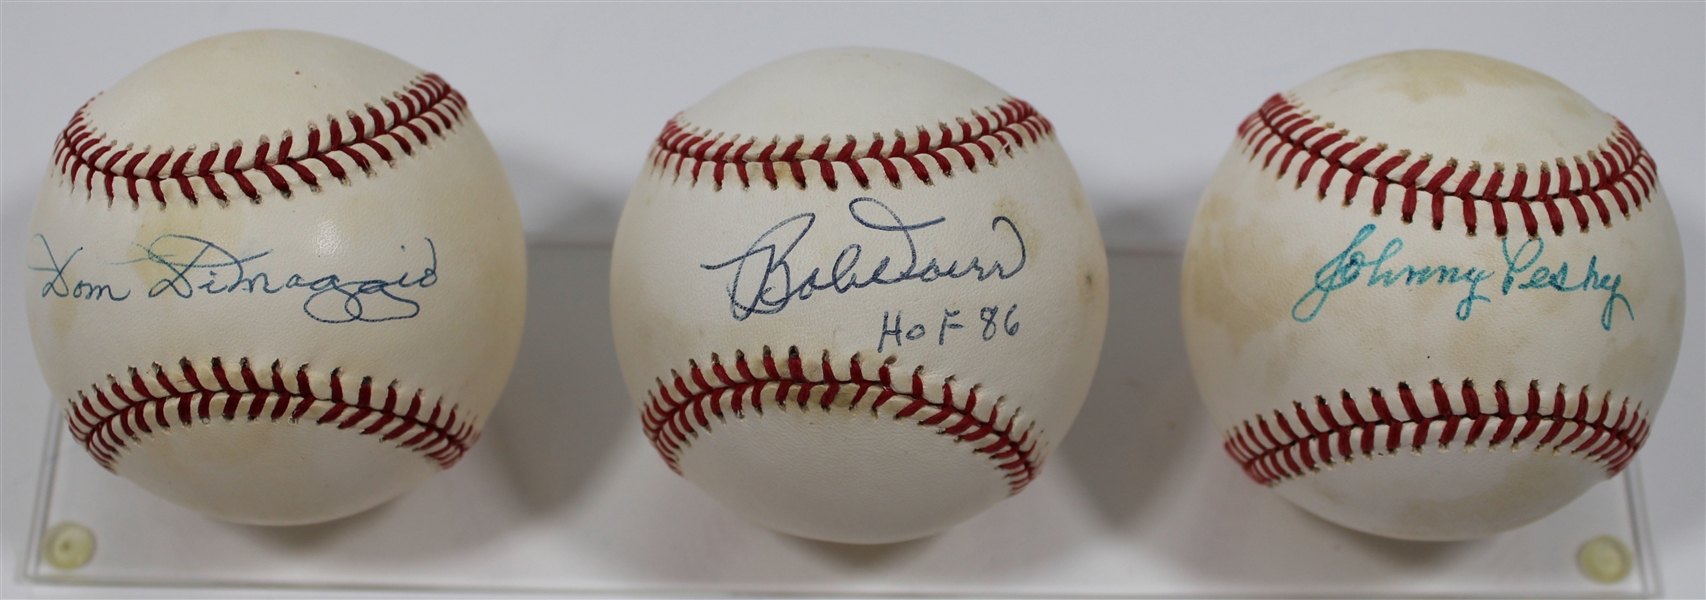 Dom DiMaggio-Bobby Doerr - Johnny Pesky Signed Baseballs - JSA